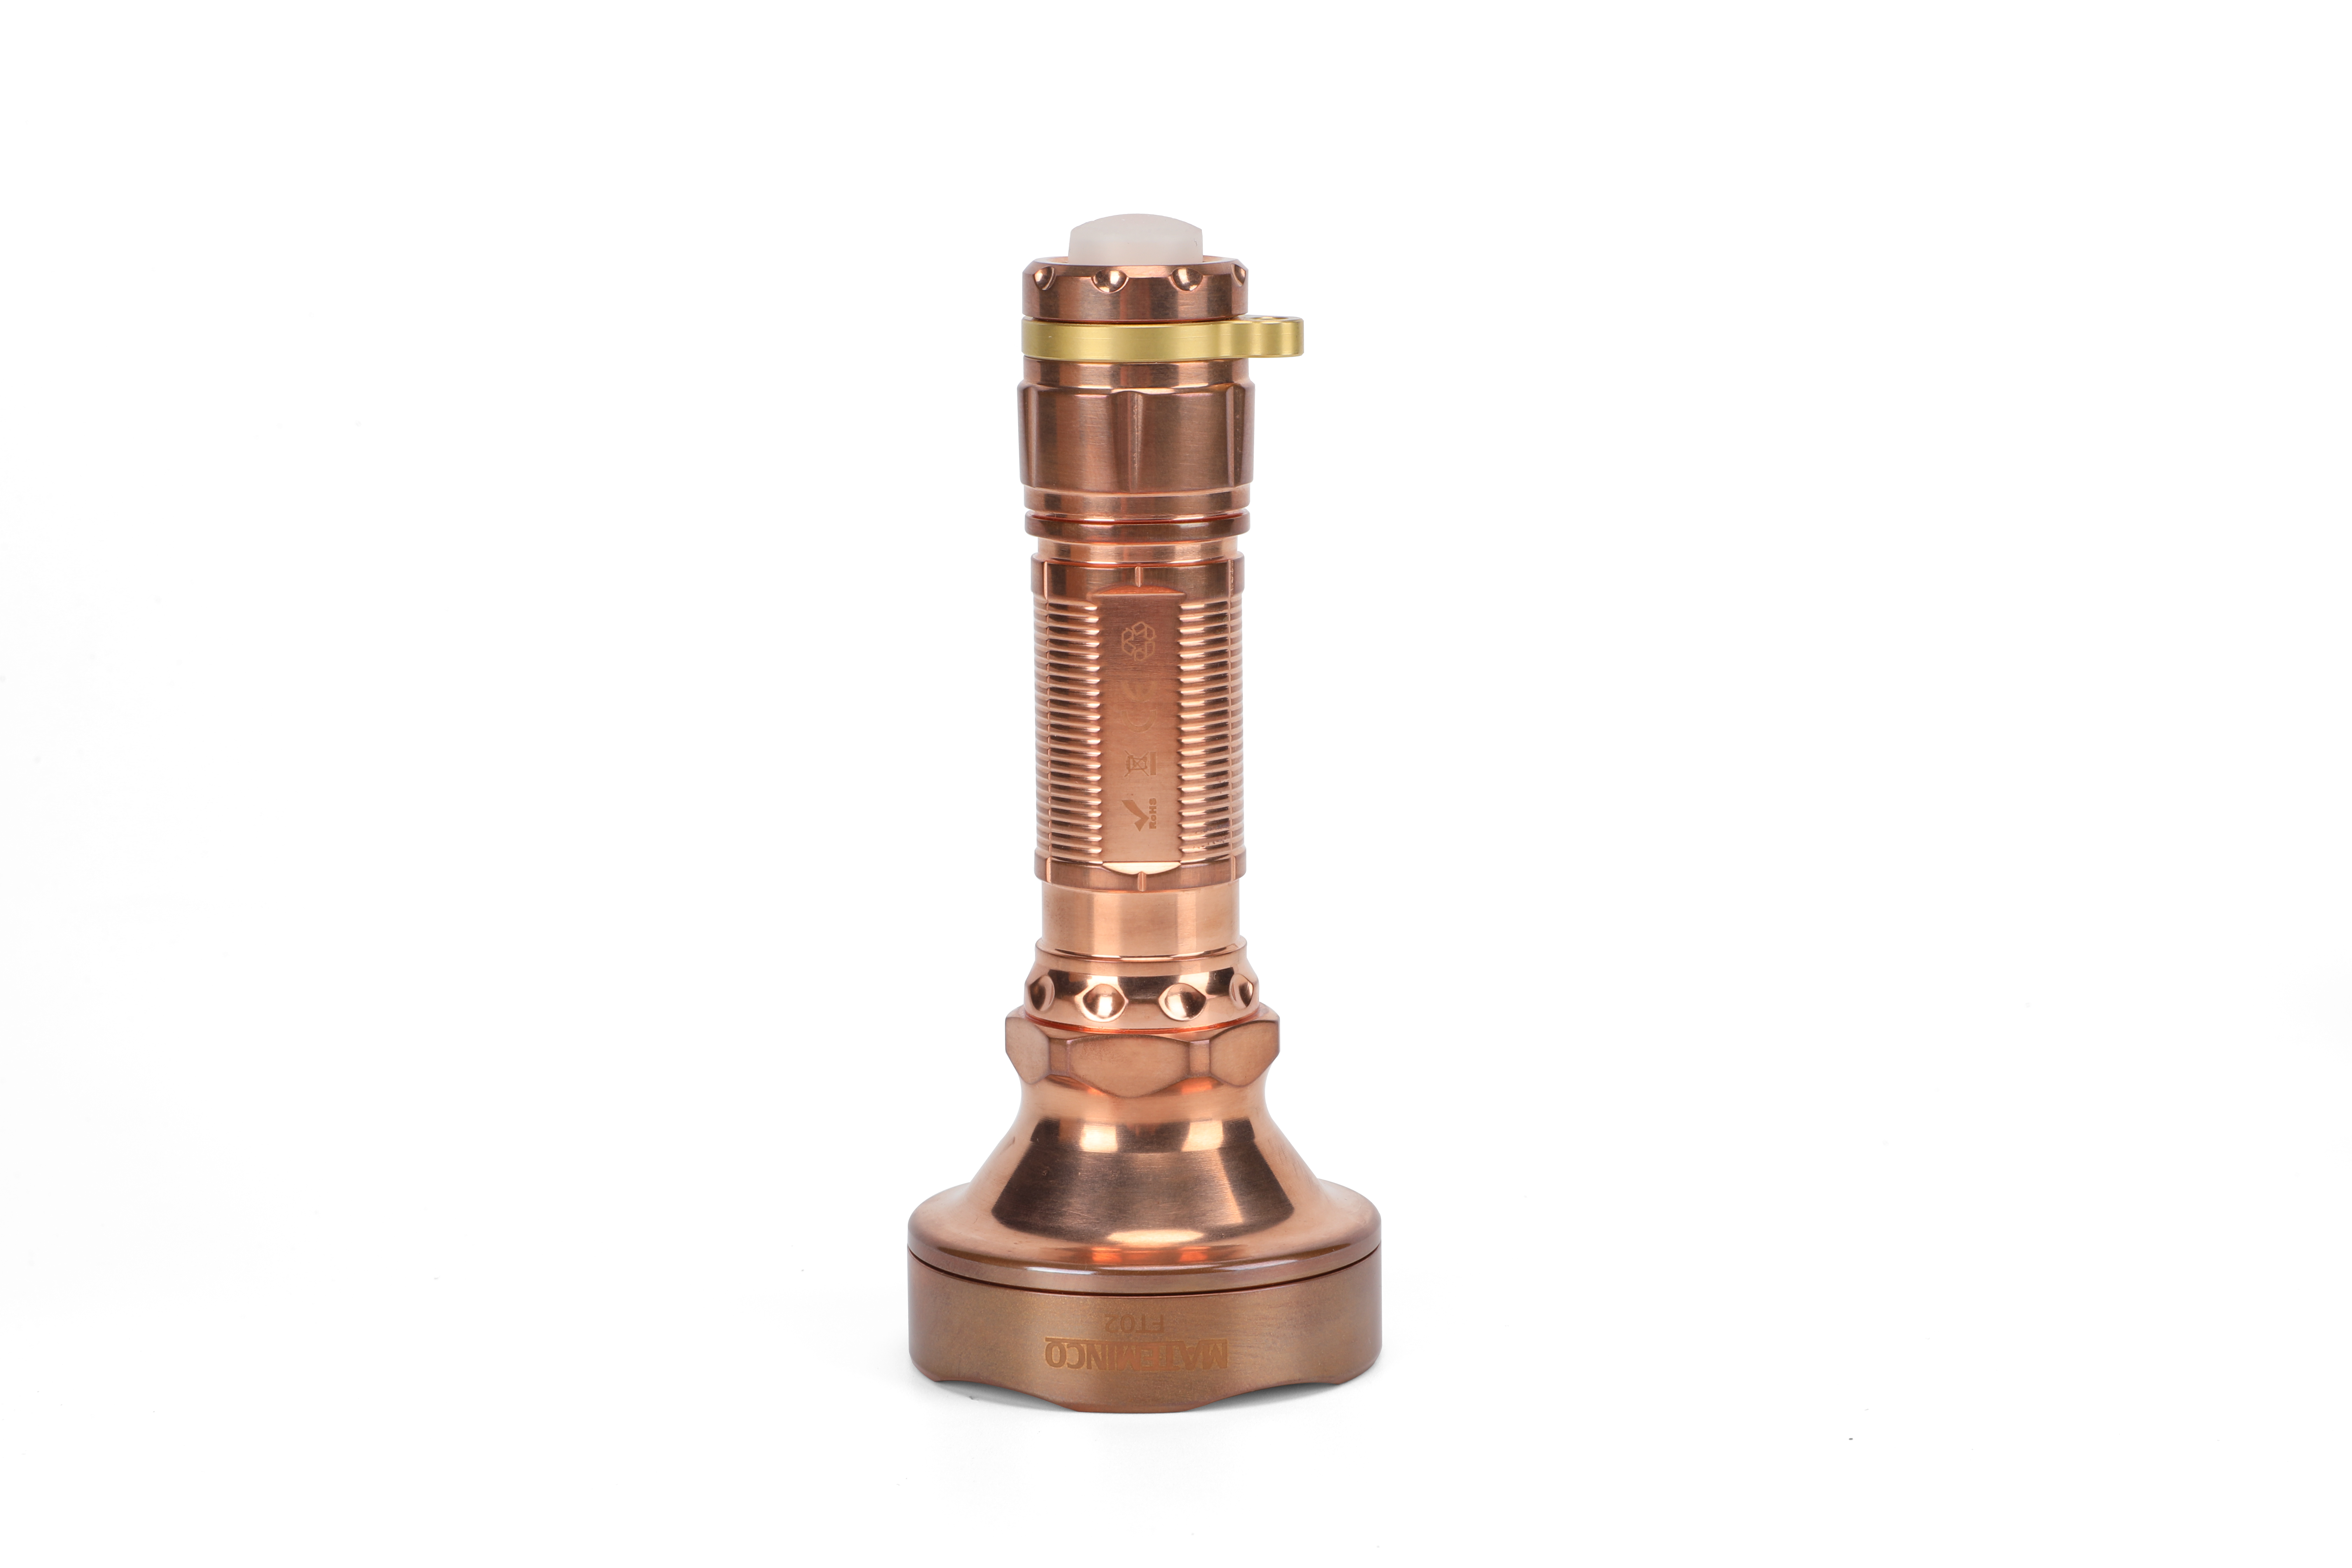 Mateminco FT02 Copper / Brass SFH55.2 LED 6160 Lumens 346 Meters 18650 Tactical Flashlight